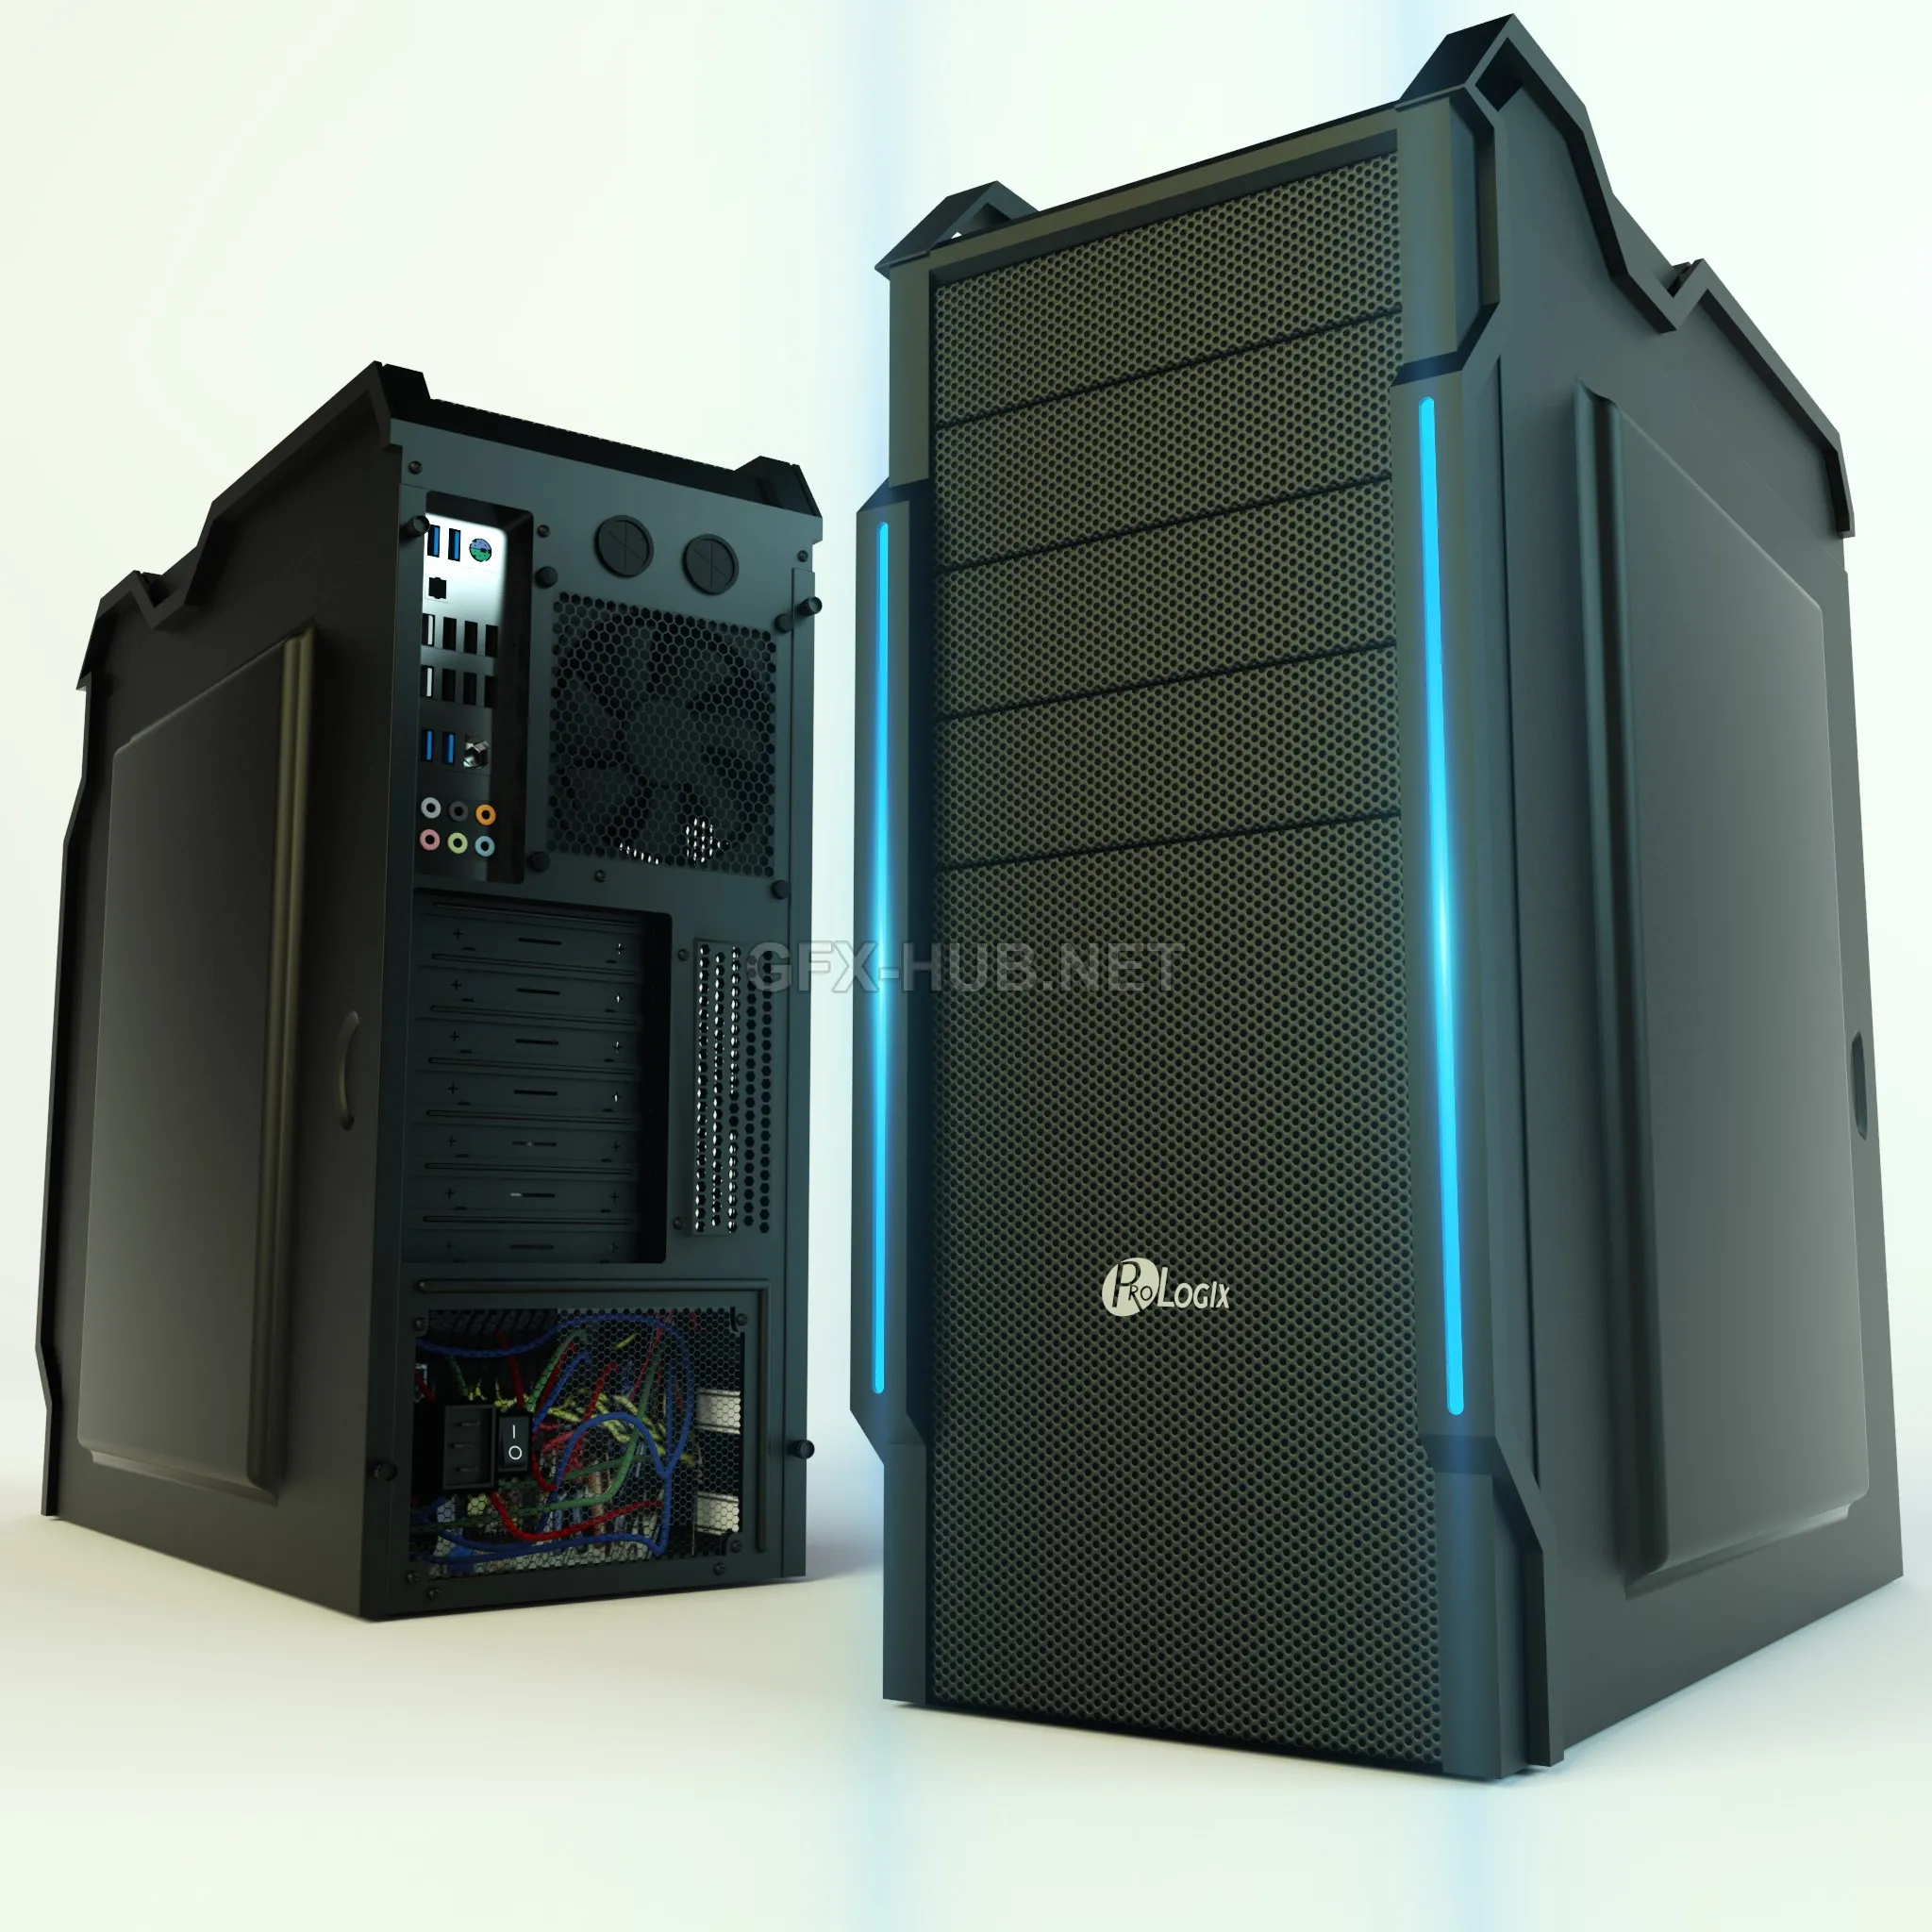 FURNITURE 3D MODELS – PC case Prologix